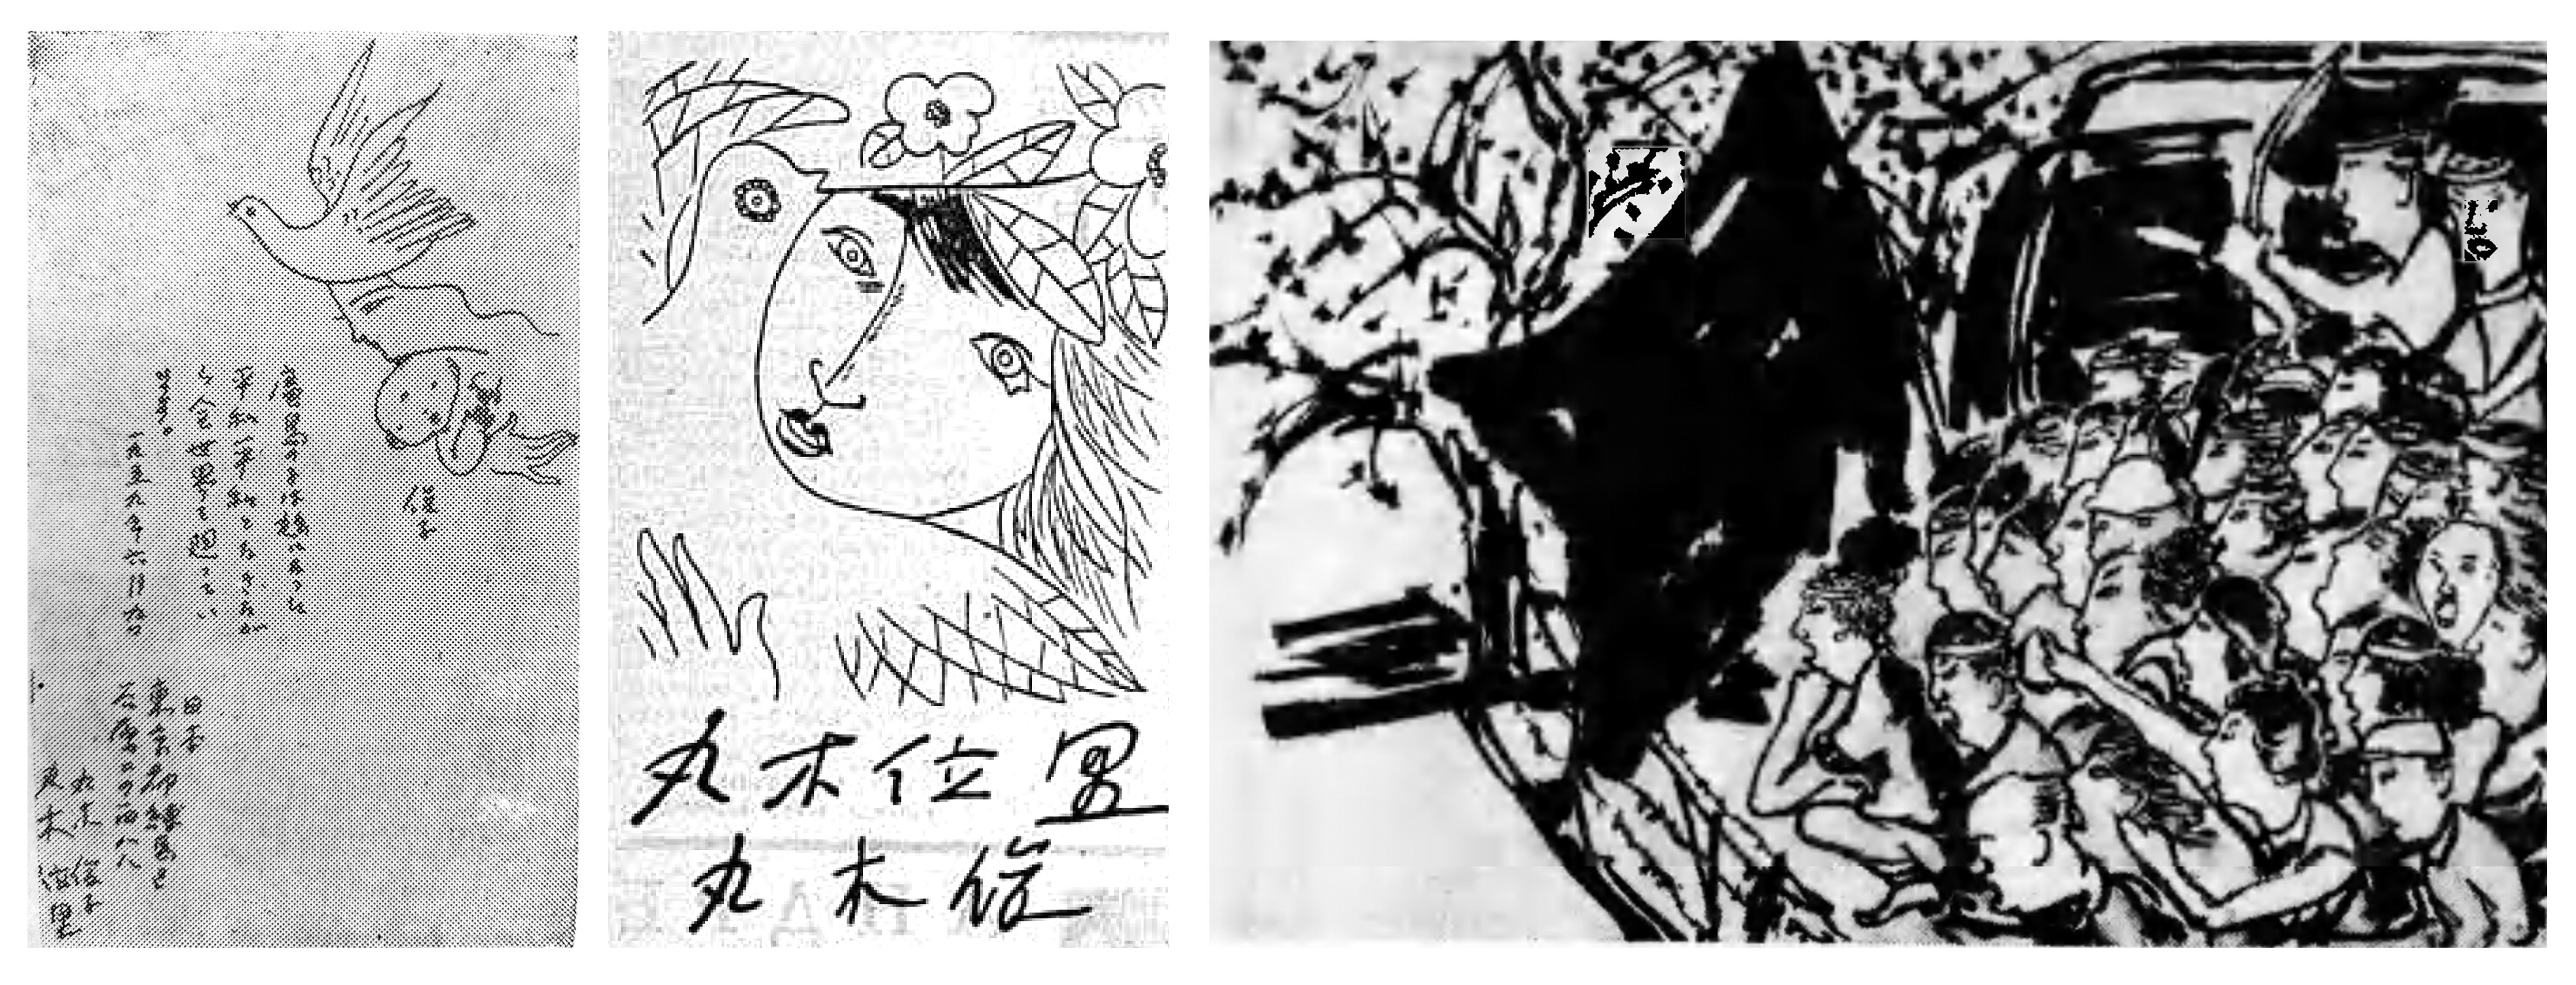 10. Left: drawing by Maruki Toshi for the magazine "Far East" (1960. No. 5. p. 191.). In the centre: drawing by Maruki Toshi for the newspaper "Sovetskaya Kultura" (1968. 08. 06. p. 4.). Right: illustration by Maruki Iri for "Literaturnaya Gazeta" (1956. No. 10. p. 4.).